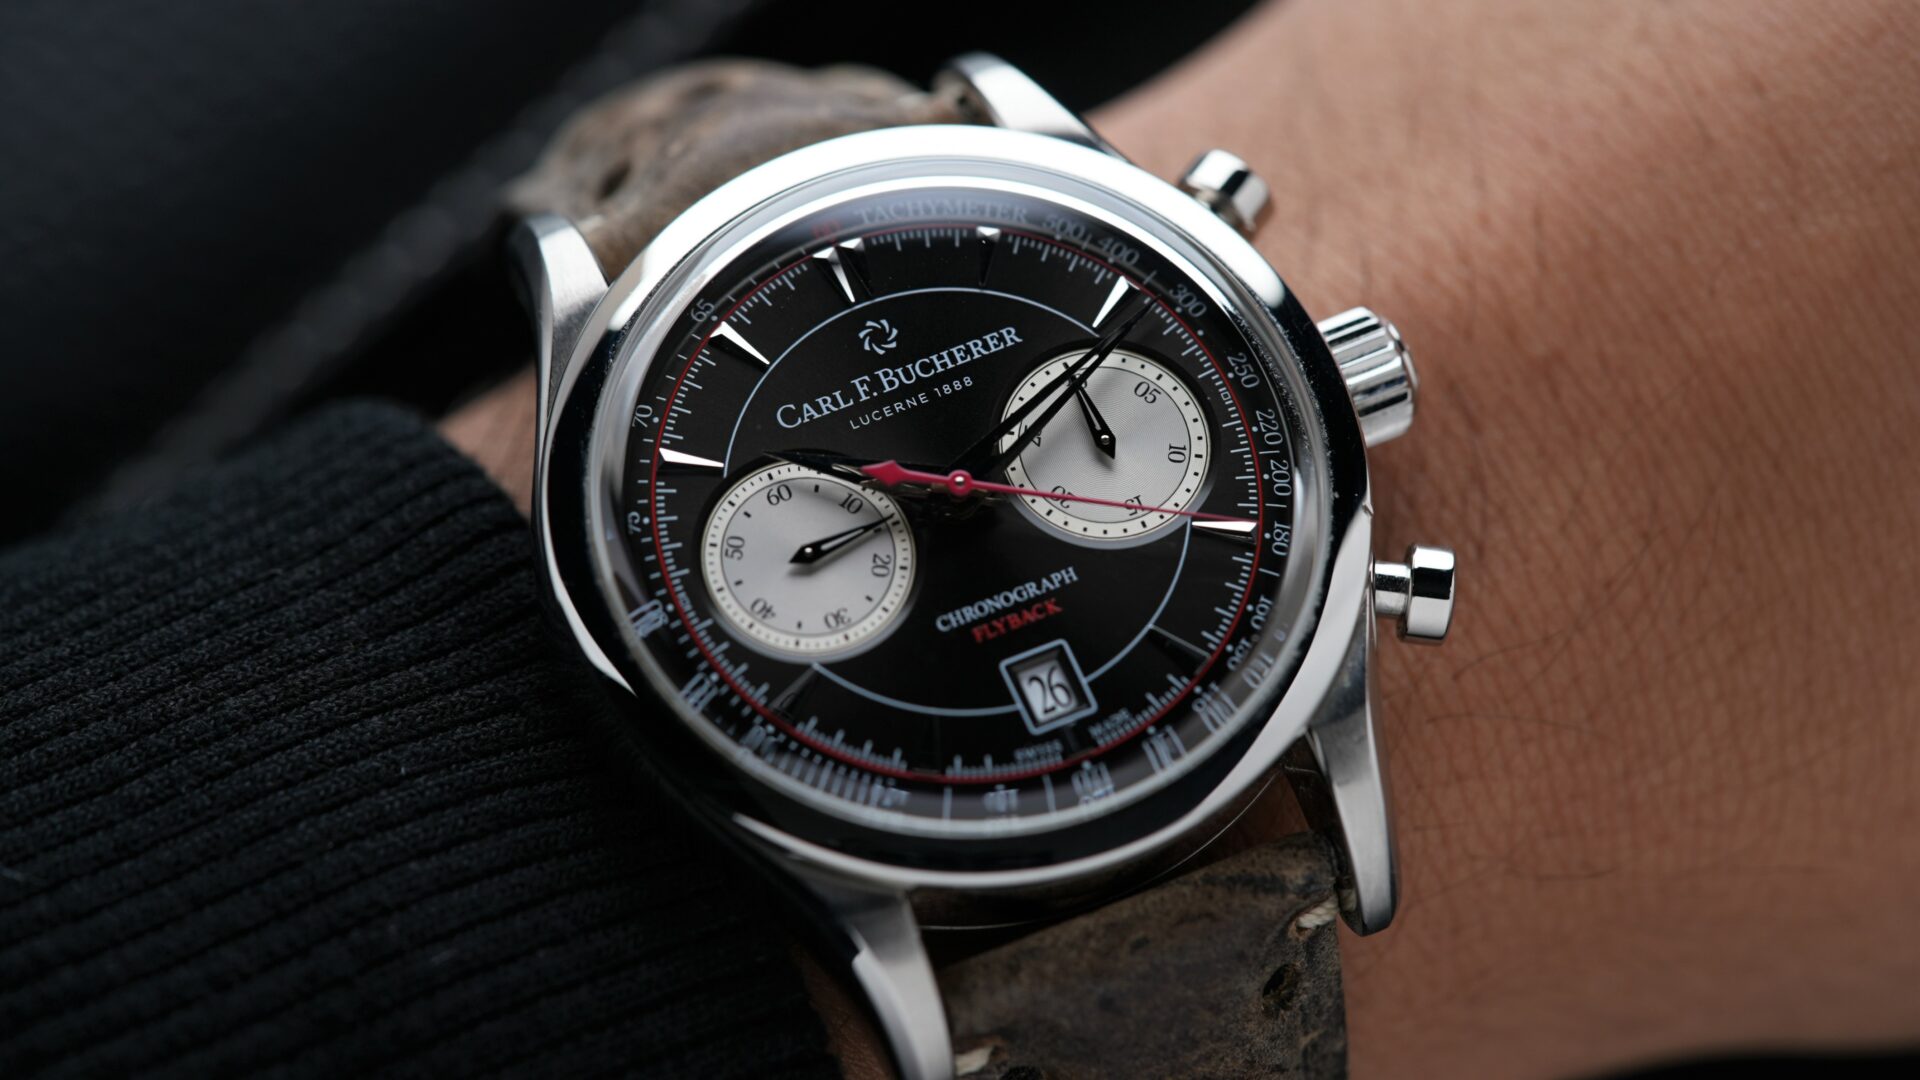 Carl F. Bucherer Manero Flyback Chronograph 00.10919.08.33.02 watch displayed on the wrist.